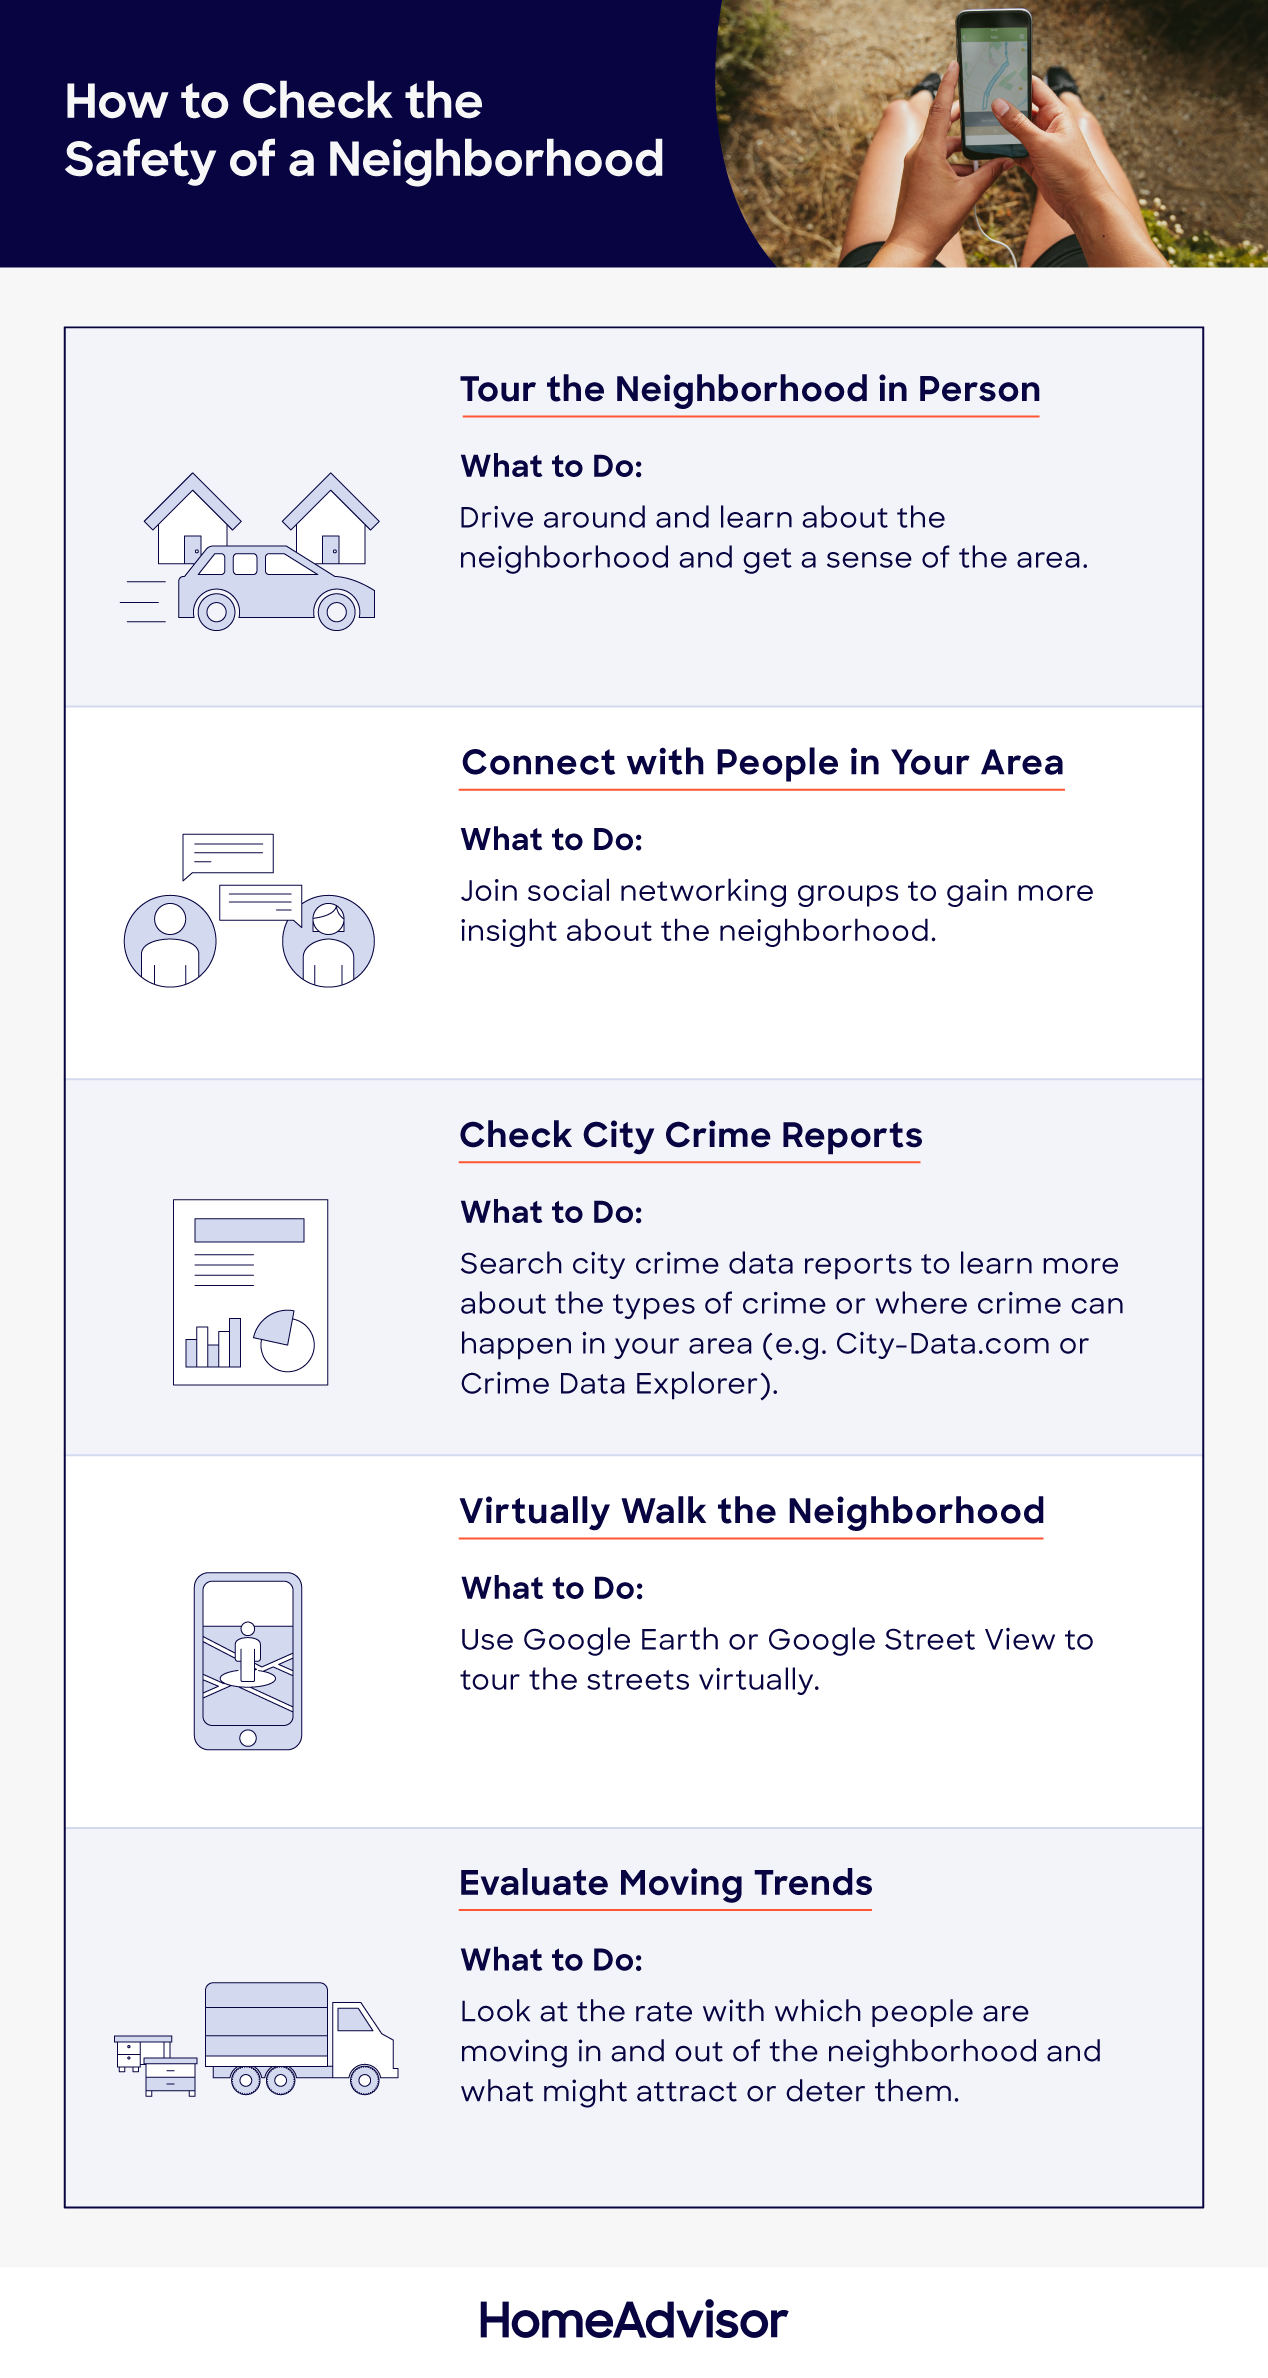 Minneapolis, MN Crime Rates and Statistics - NeighborhoodScout